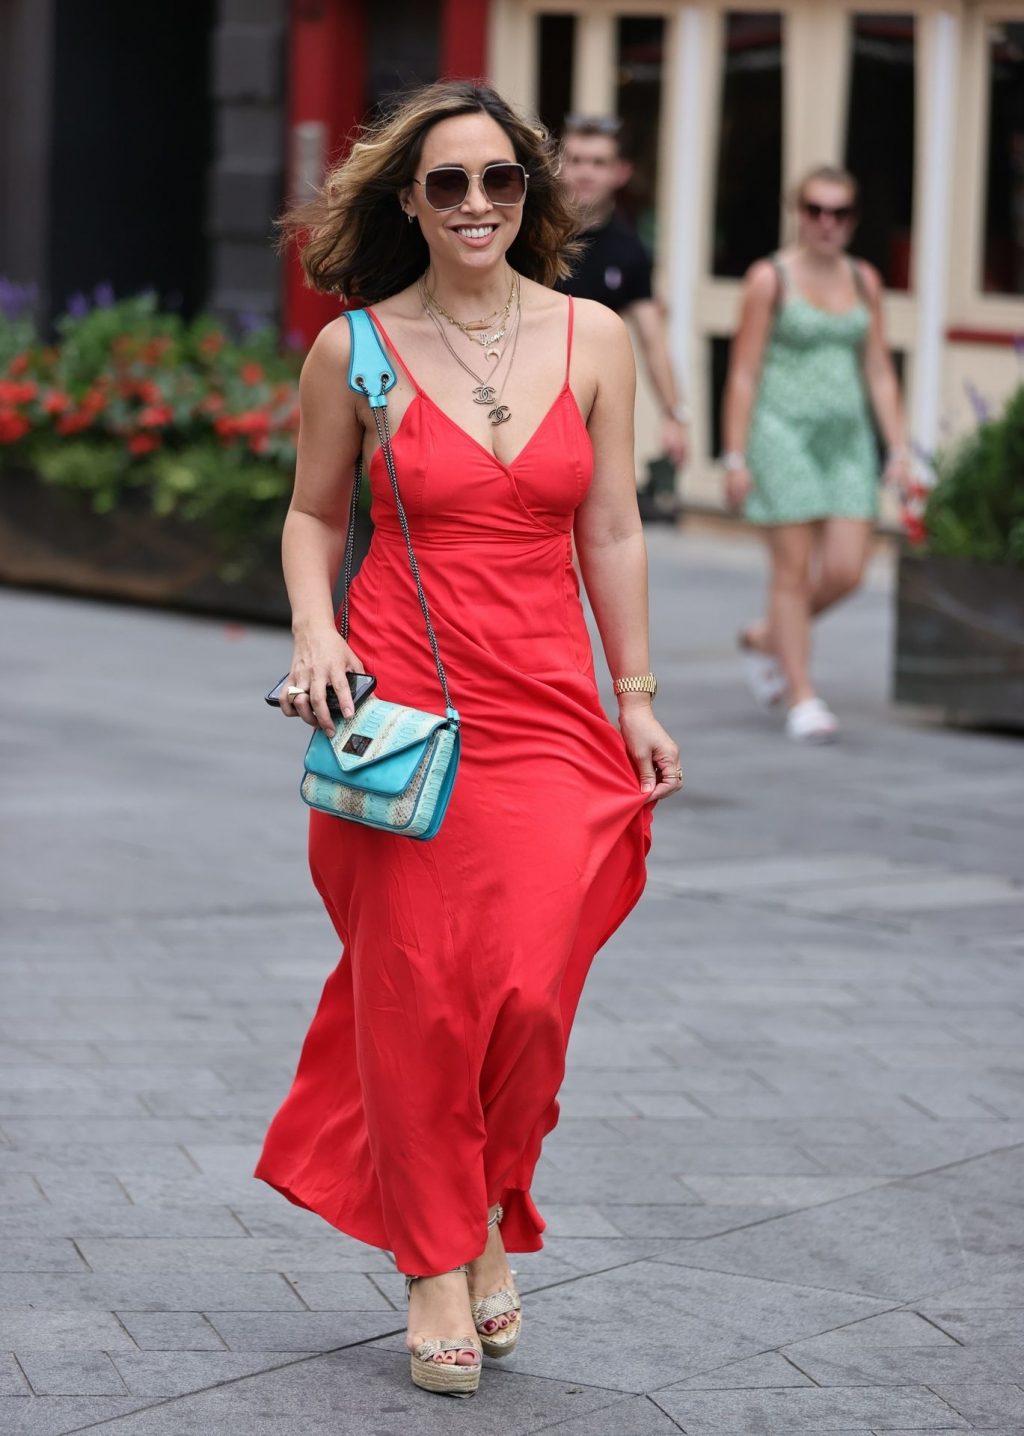 Myleene Klass Looks Stunning in a Red Dress (14 Photos)